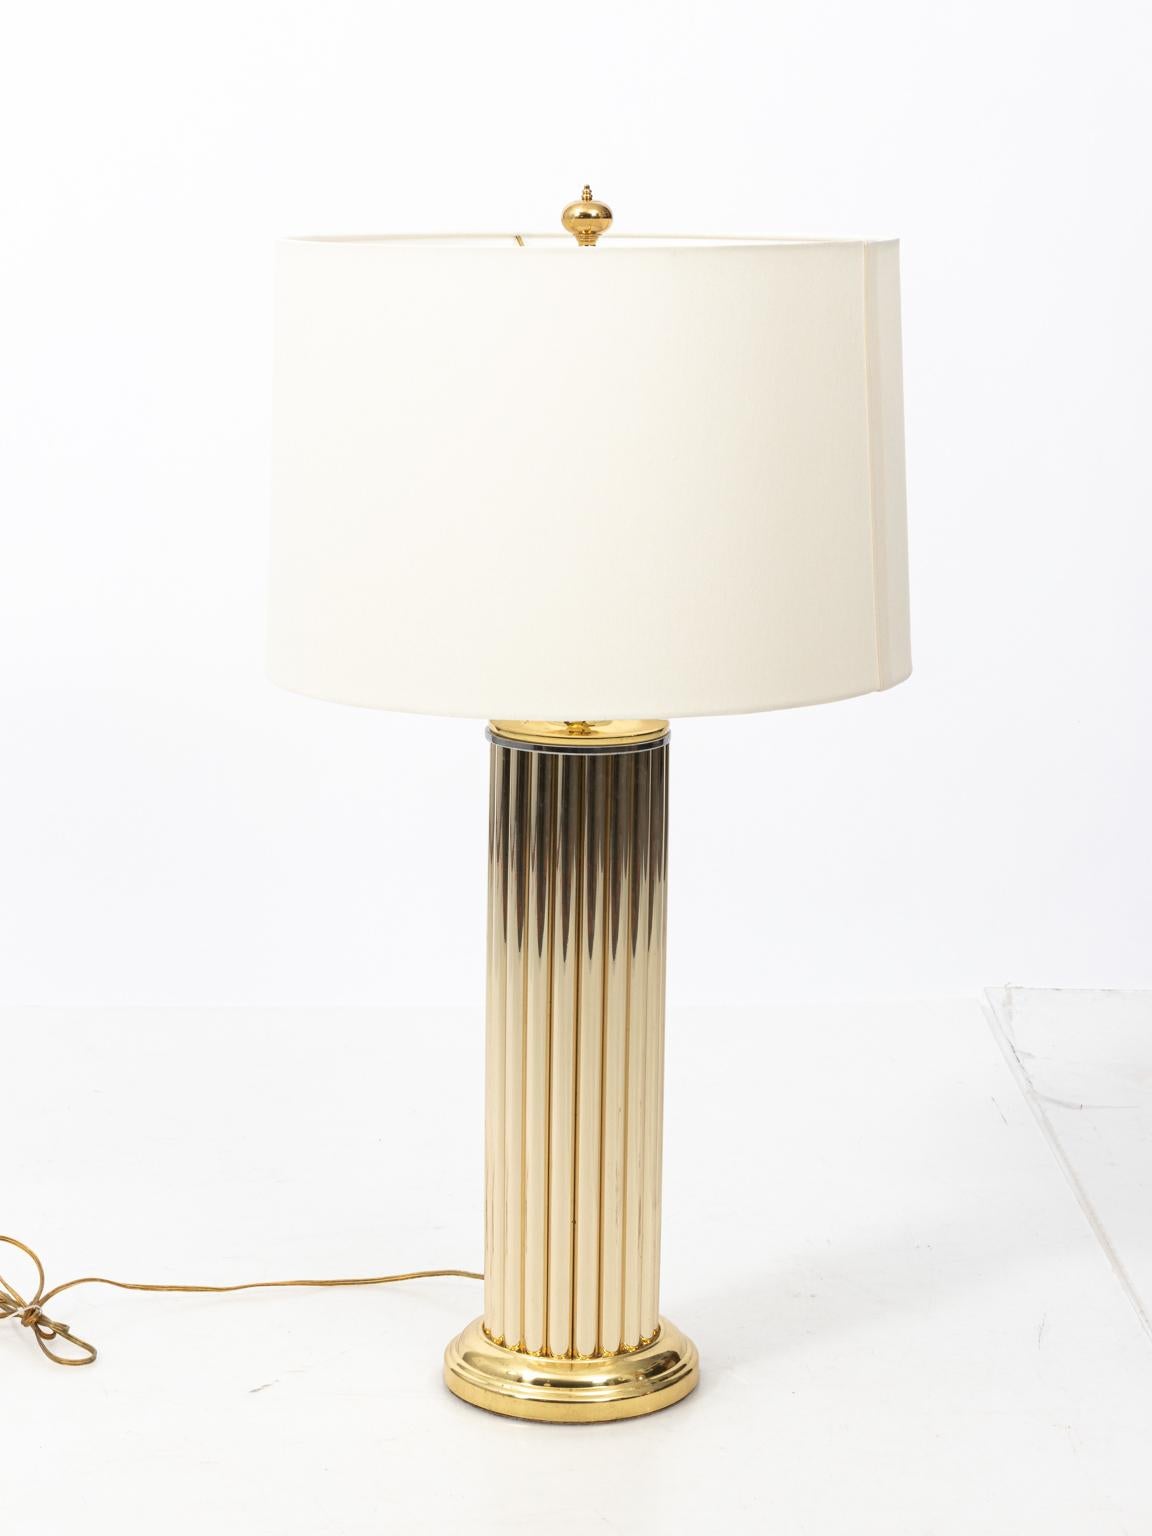 NEW GOLDTONE LAMP SHADE FINIAL RING 